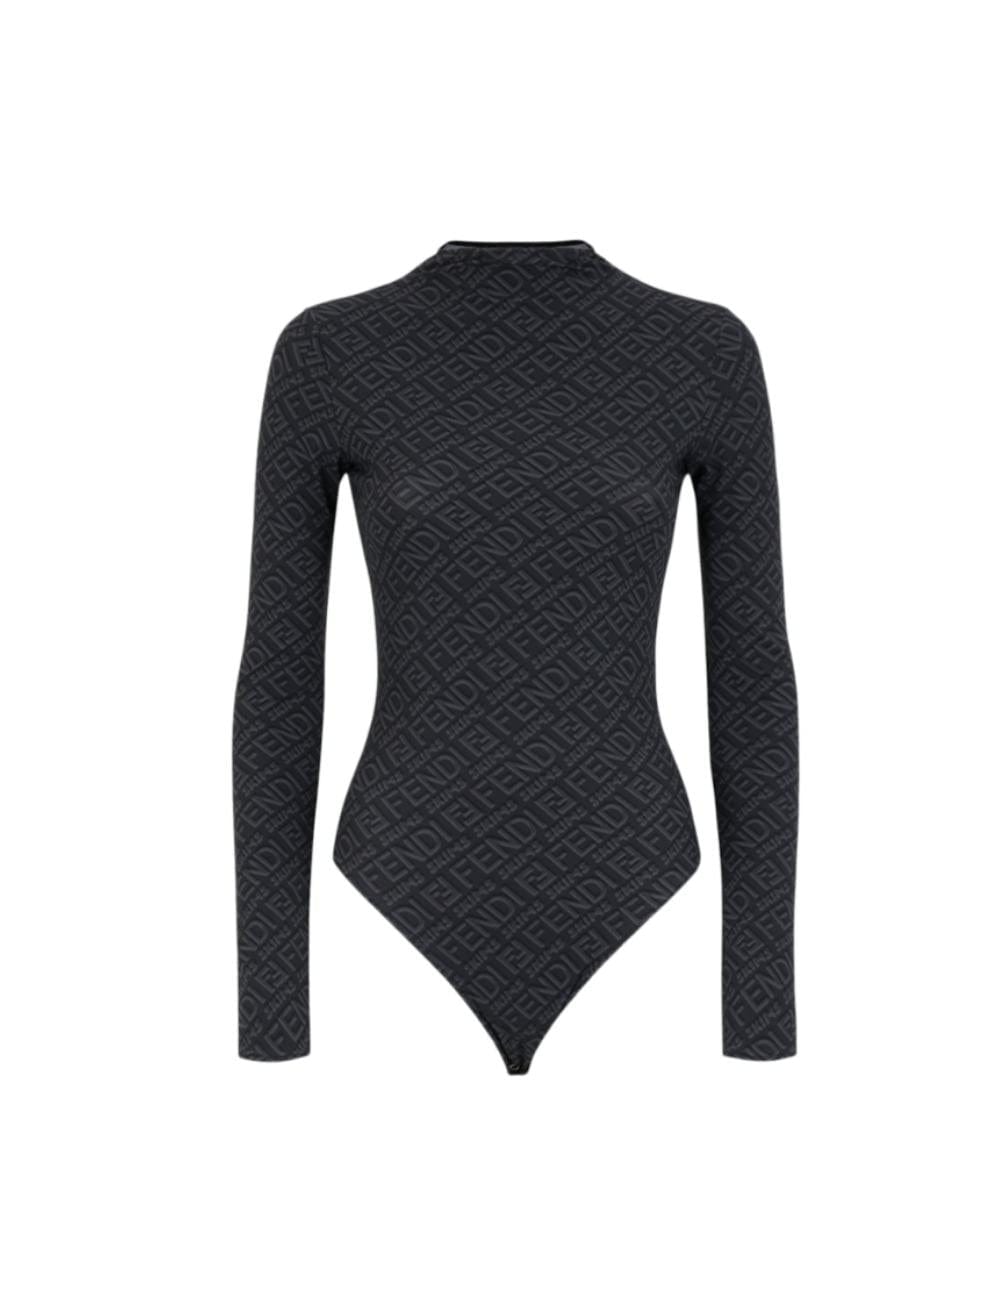 Black Long Sleeve T-Neck Bodysuit - X-small / Black